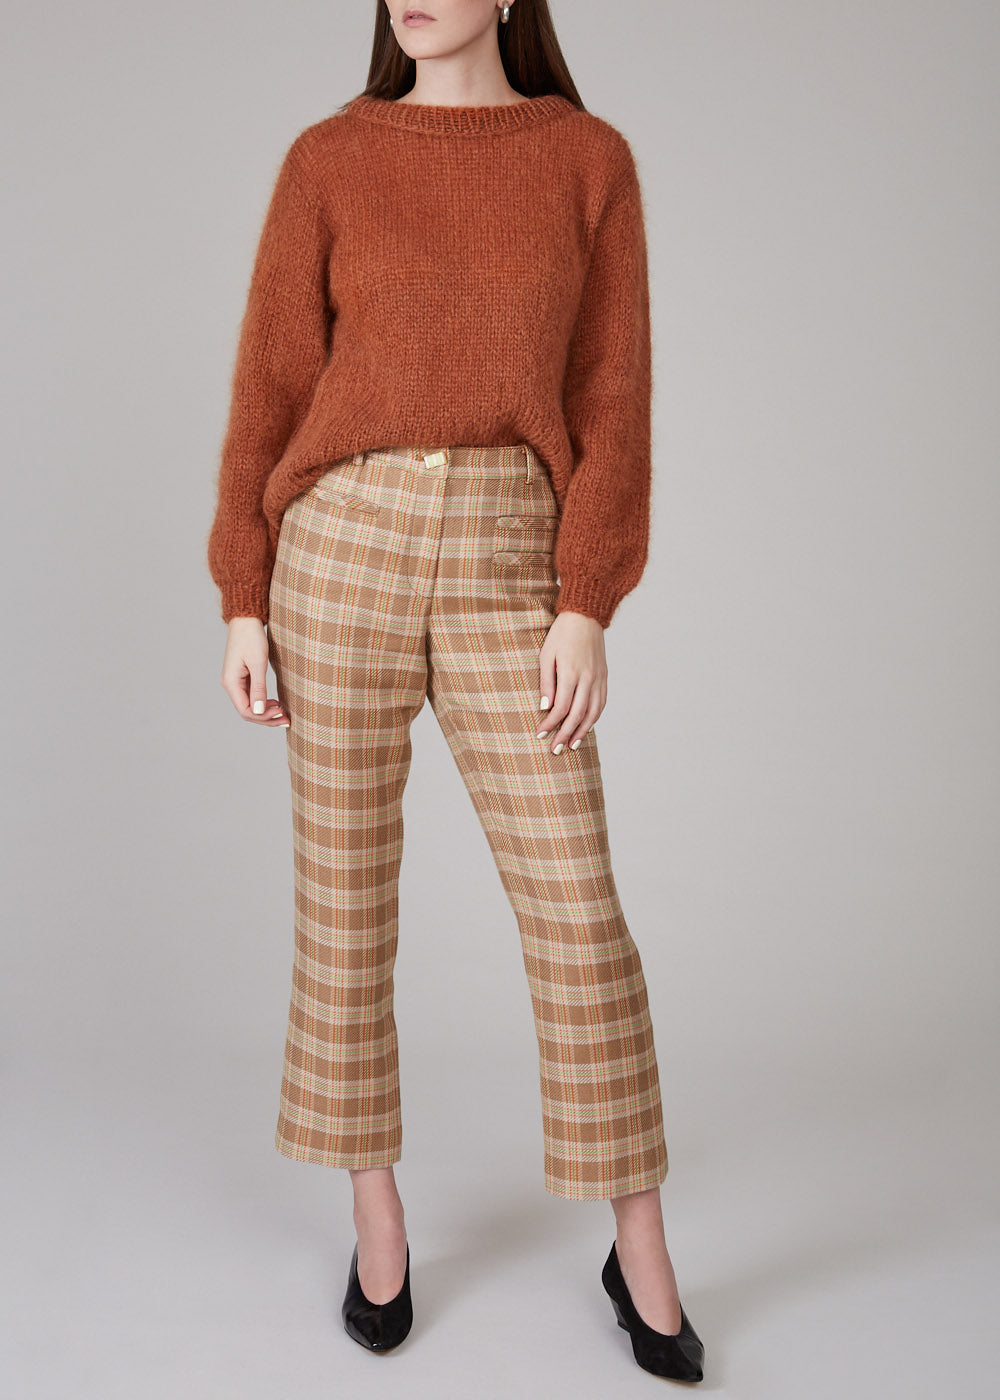 REJINA PYO - Finley pants - twill check camel/orange/green